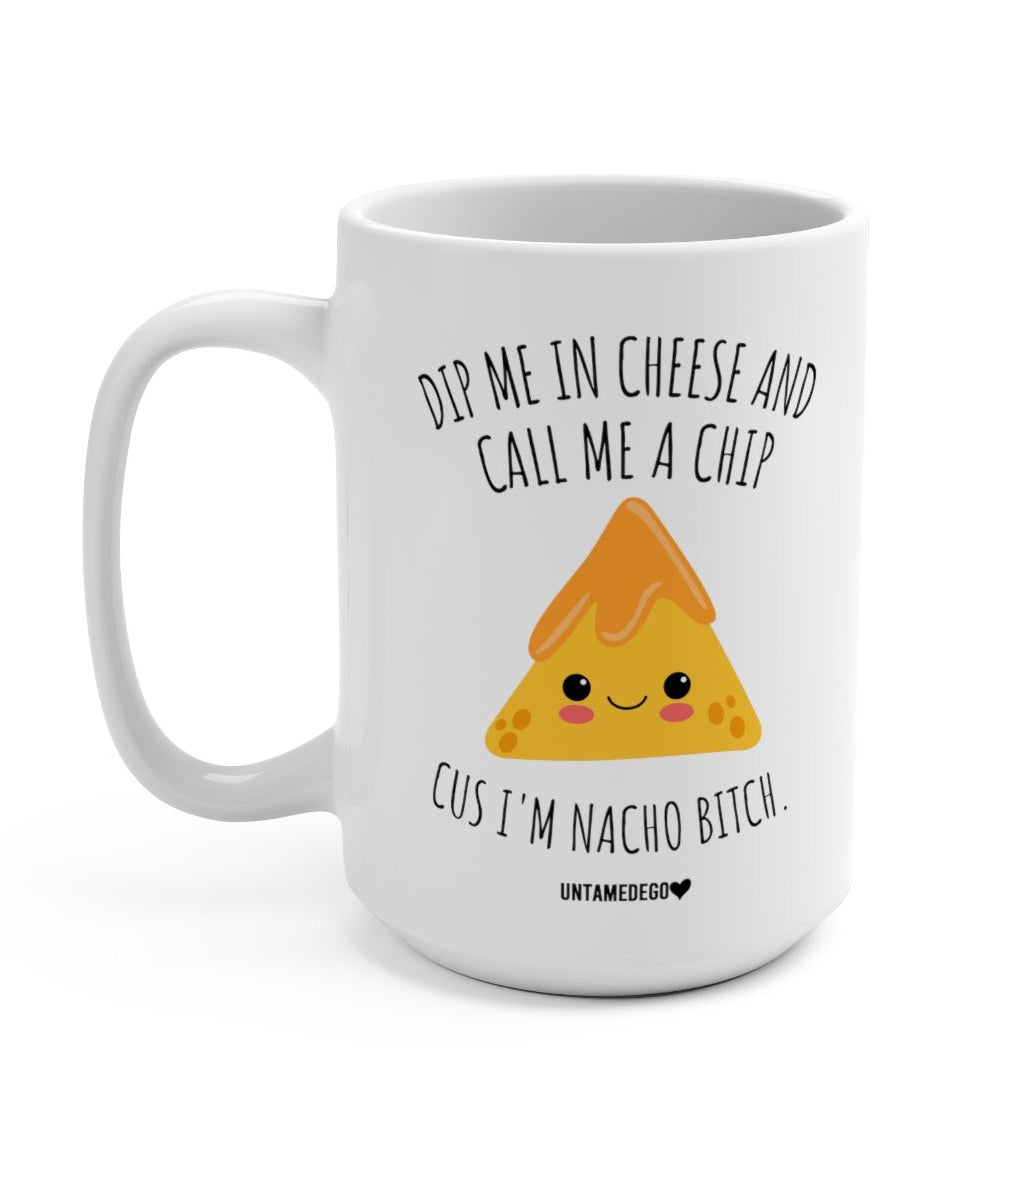 Dip Me In Cheese And Call Me A Chip Cus I'm Nacho Bitch 15oz Mug - UntamedEgo LLC.